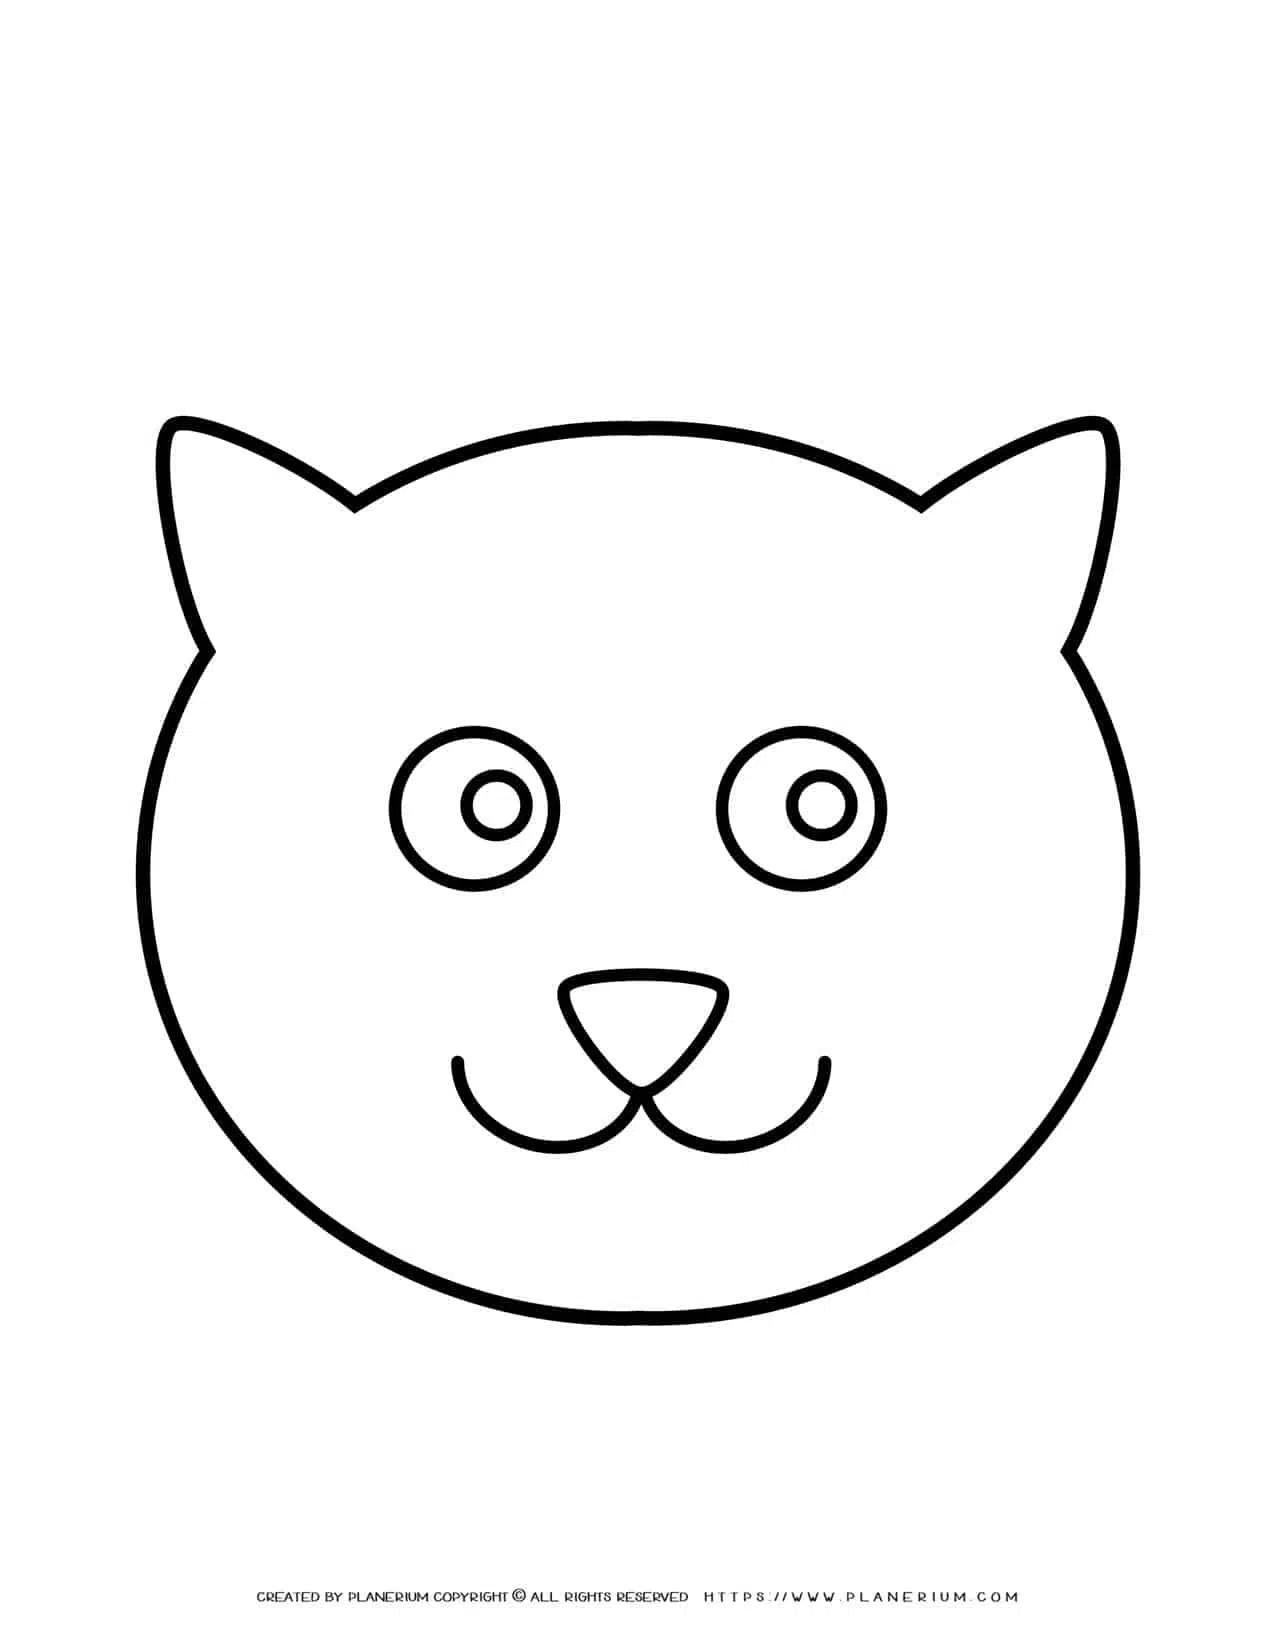 Cat Face Outline | Planerium